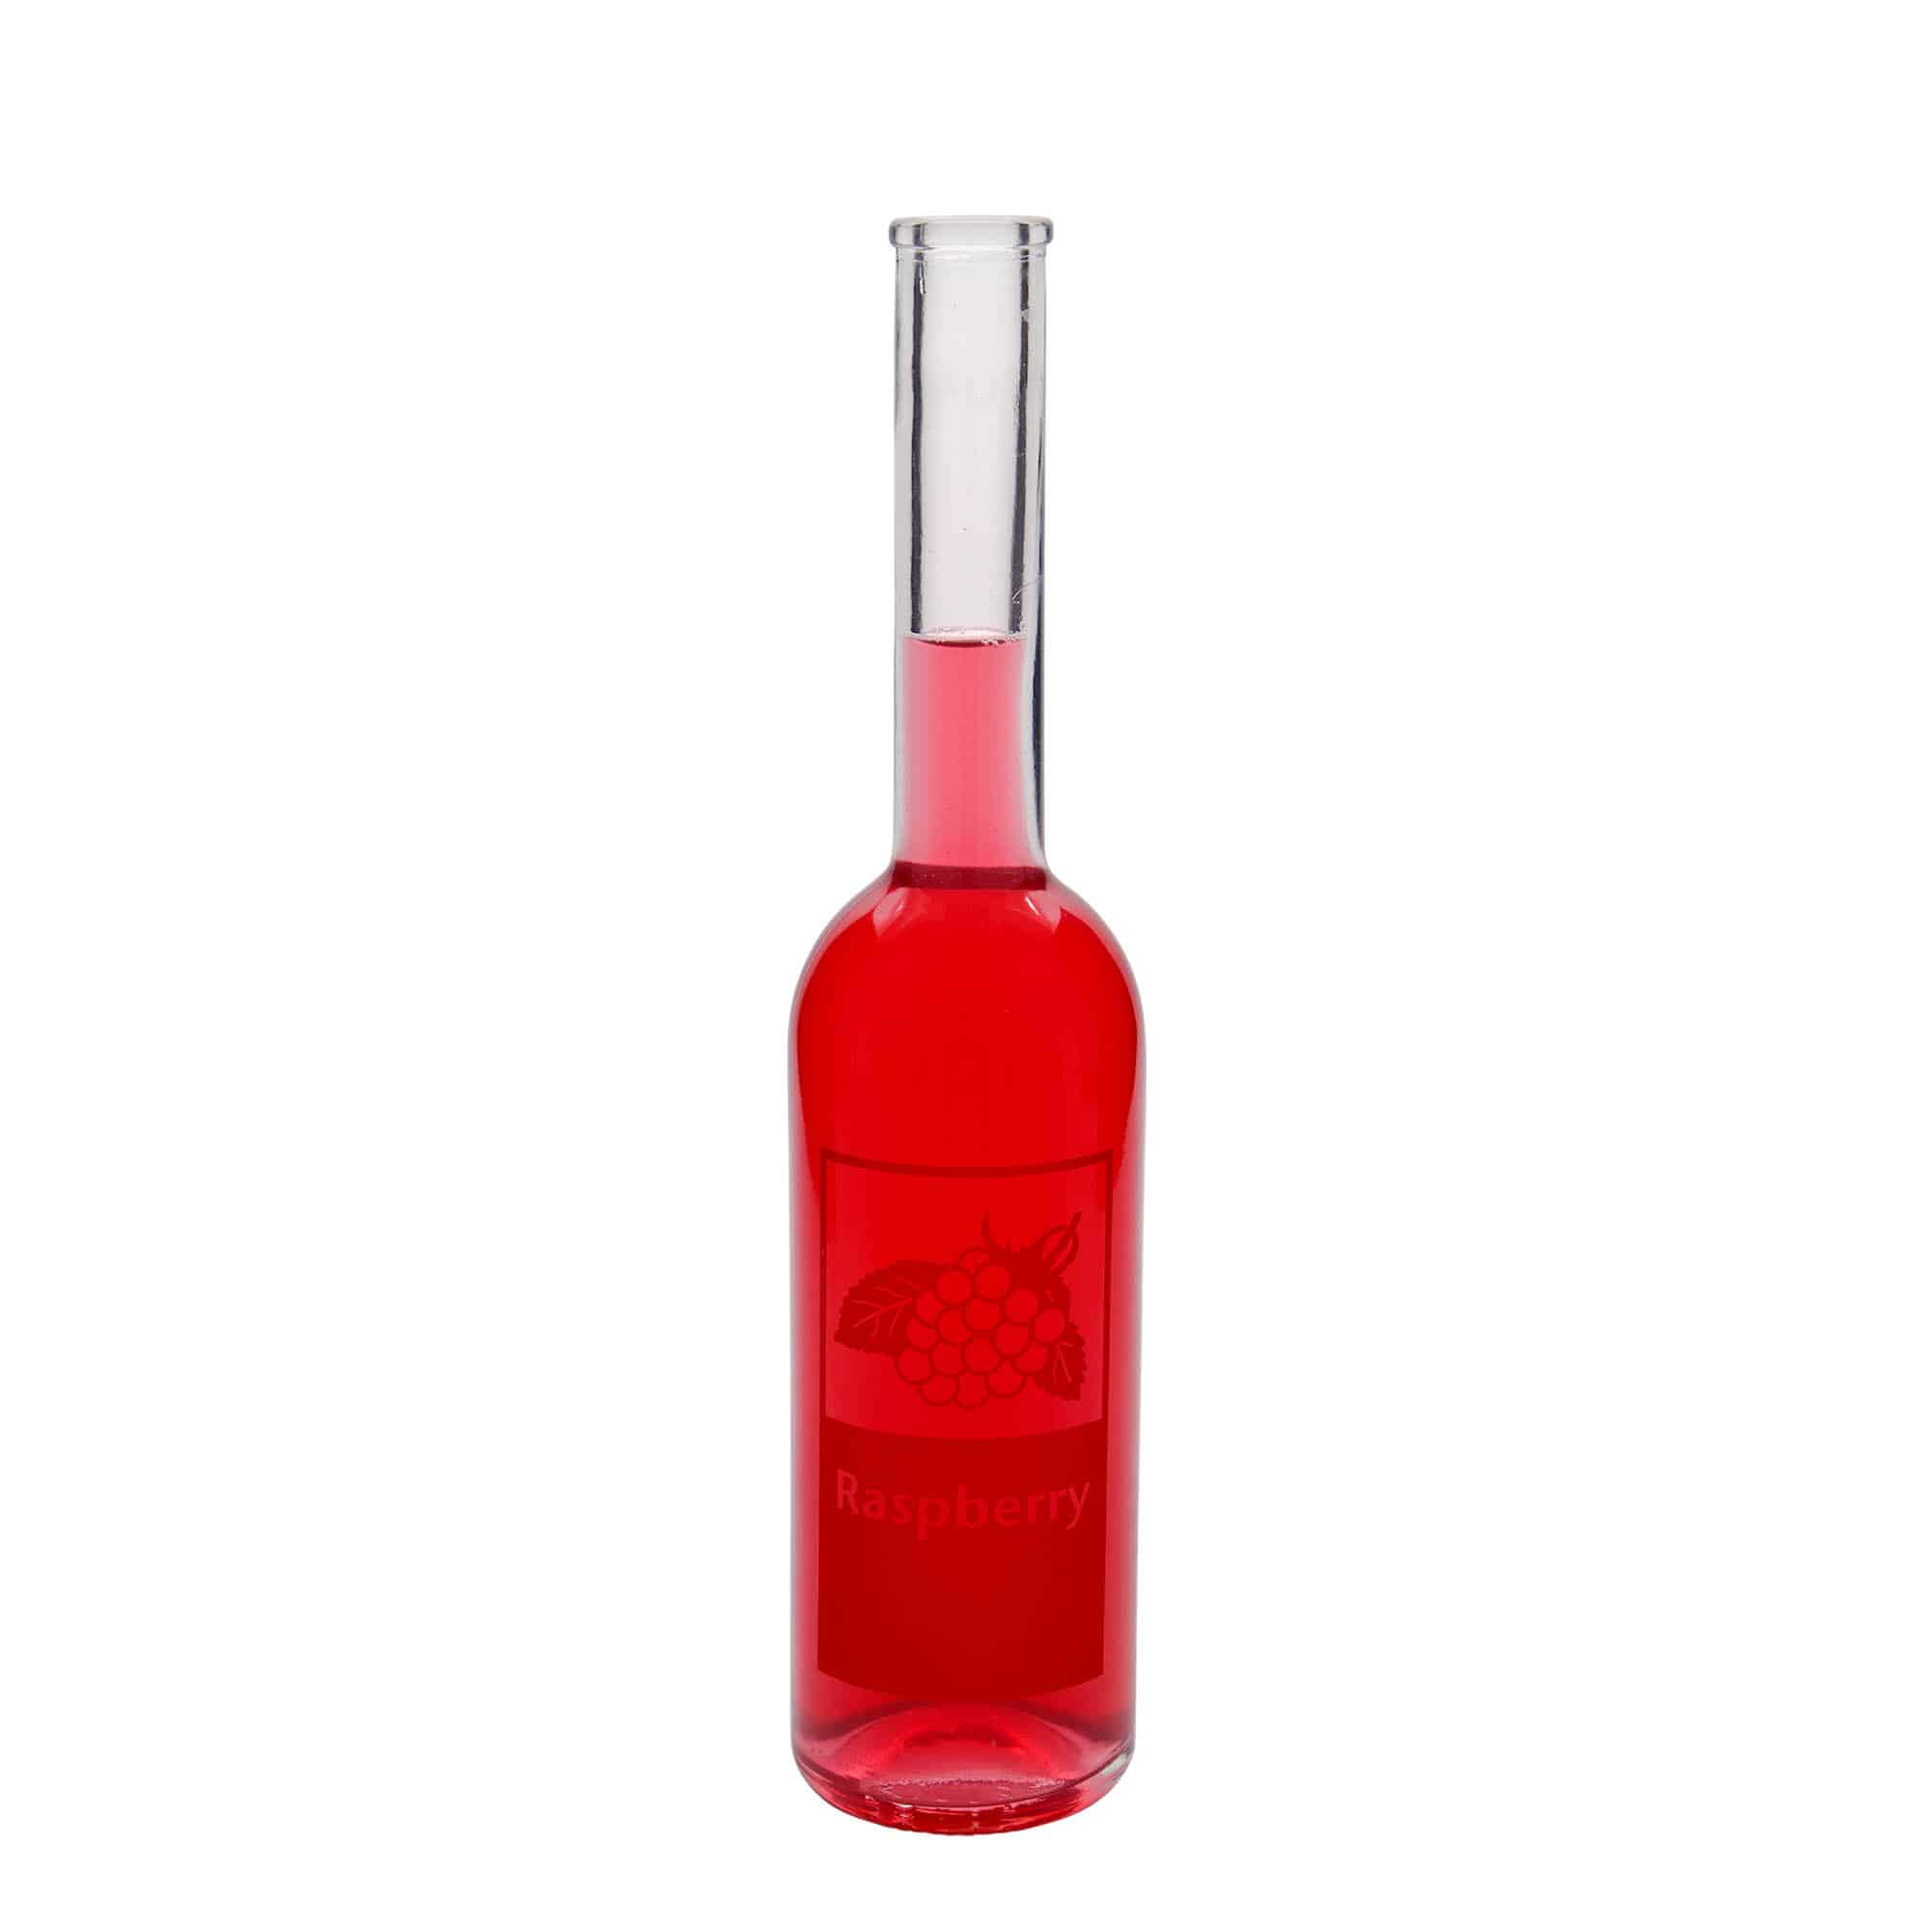 Glazen fles 'Opera', 500 ml, motief: Raspberry, monding: kurk